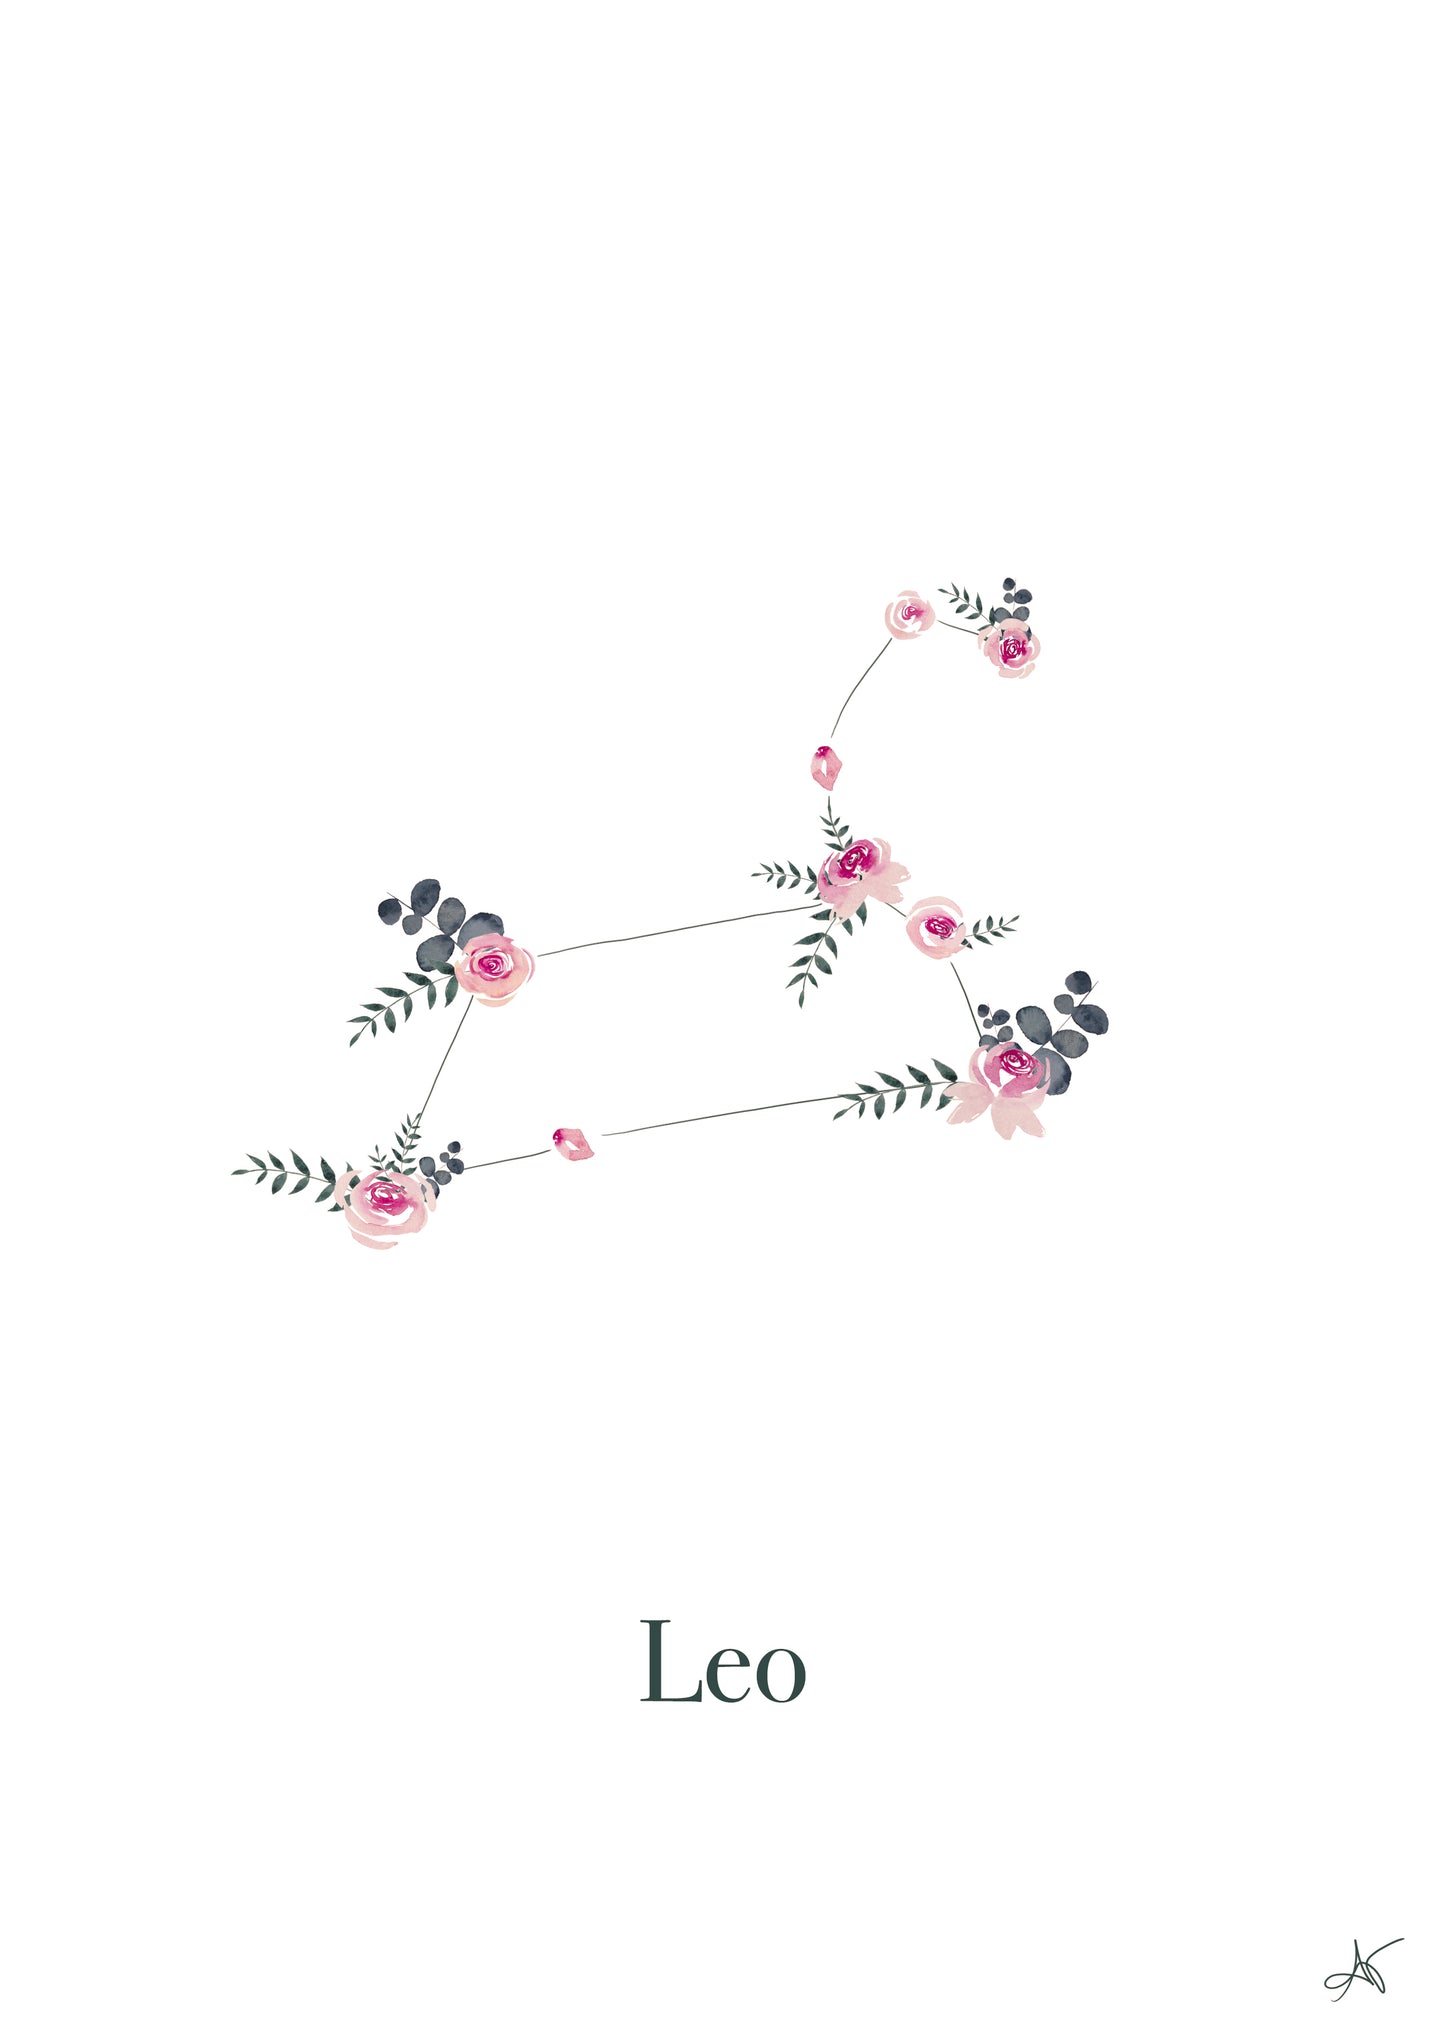 "Leo" - Roses